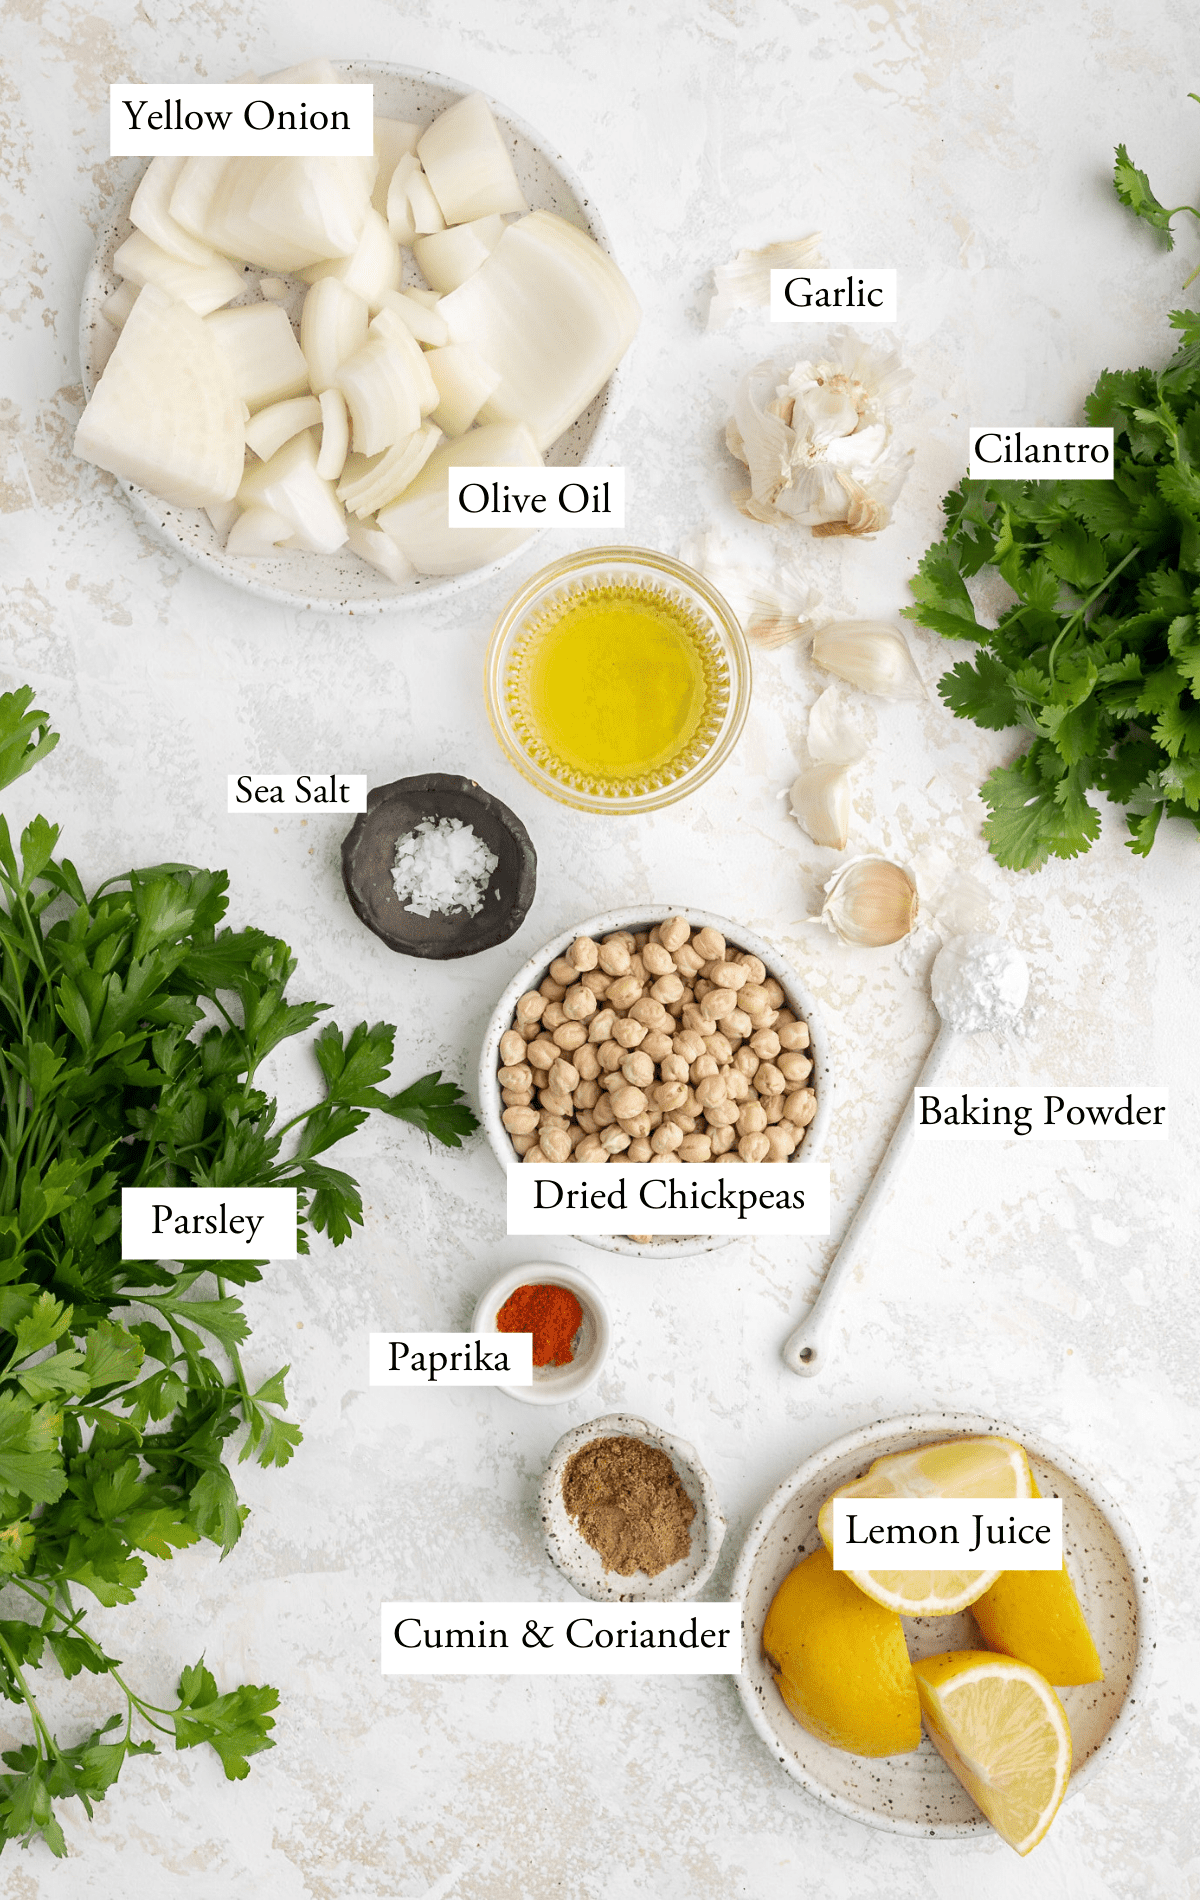 Falafel ingredients: dried chickpeas, parsley, cilantro, onion, garlic, cumin, coriander, lemon juice, baking powder, olive oil, paprika